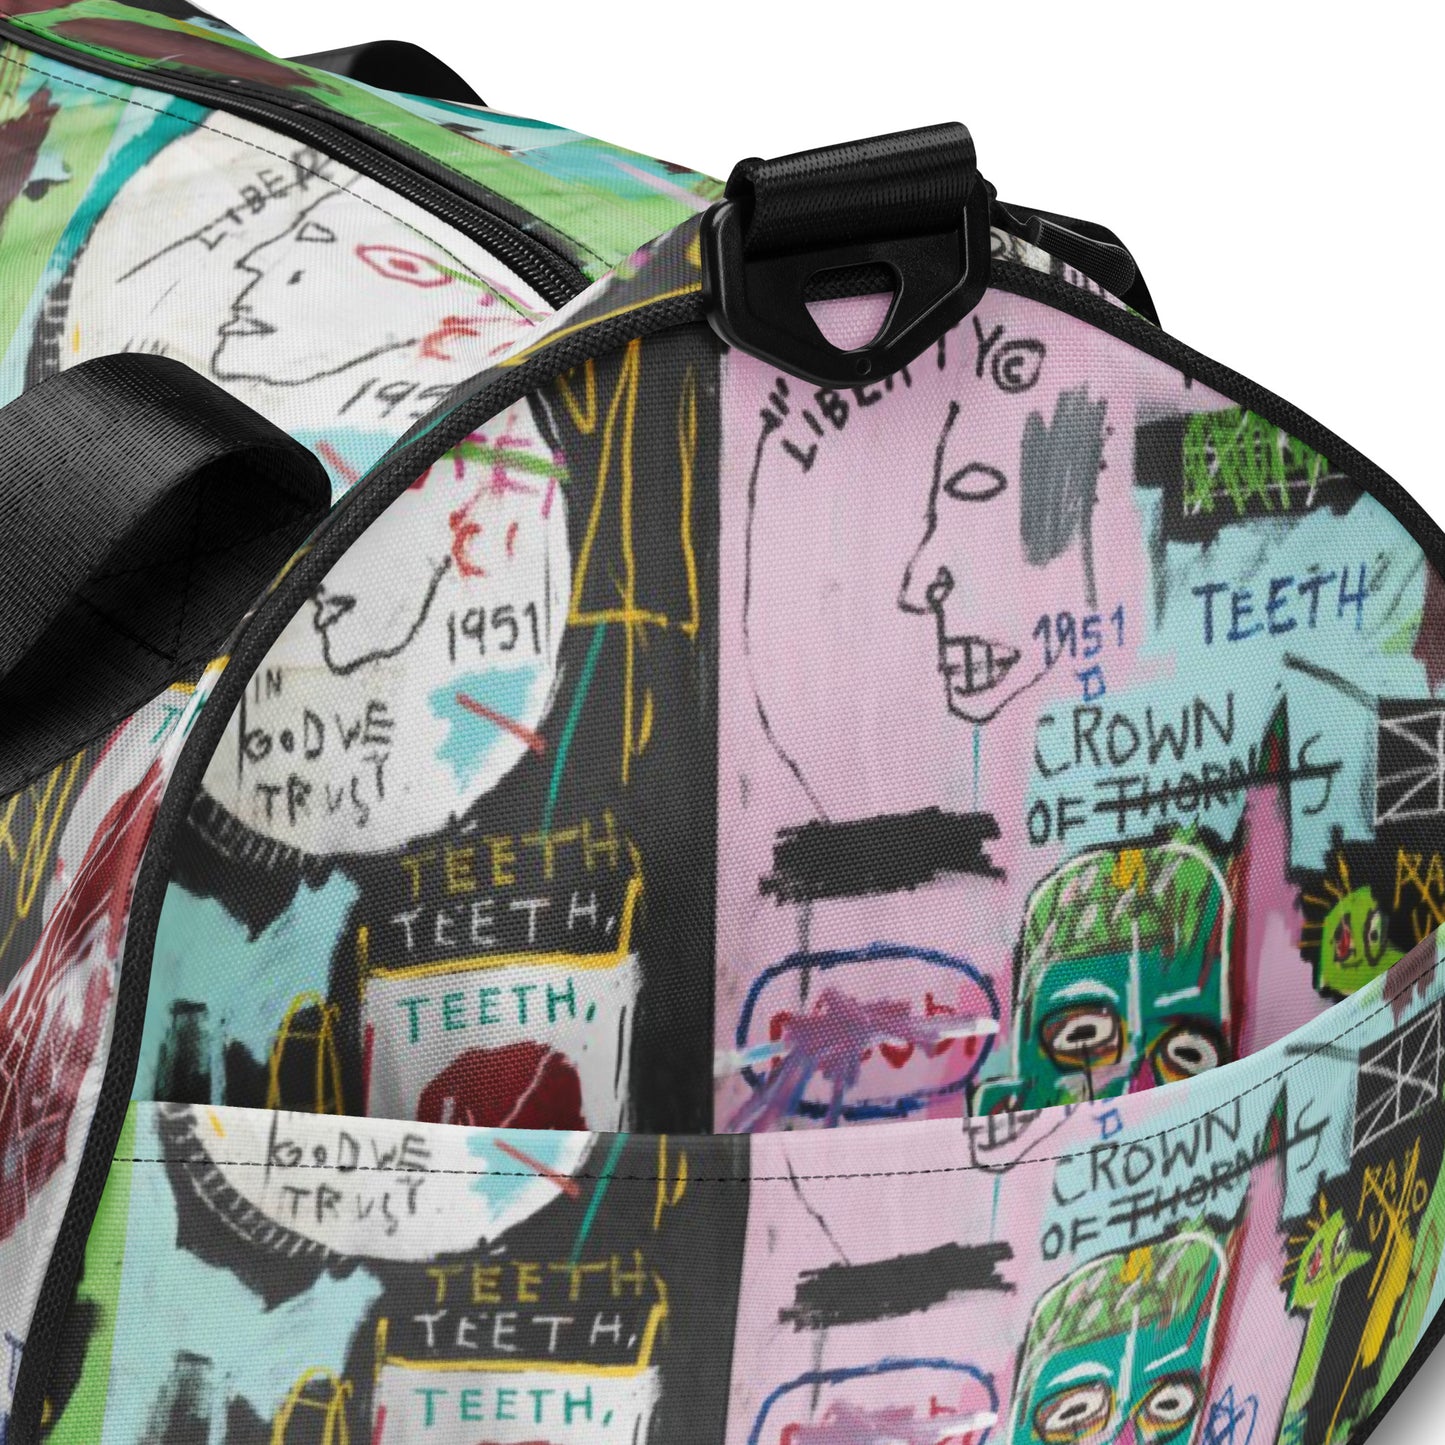 Jean-Michel Basquiat "in italian" Artwork Gym Bag